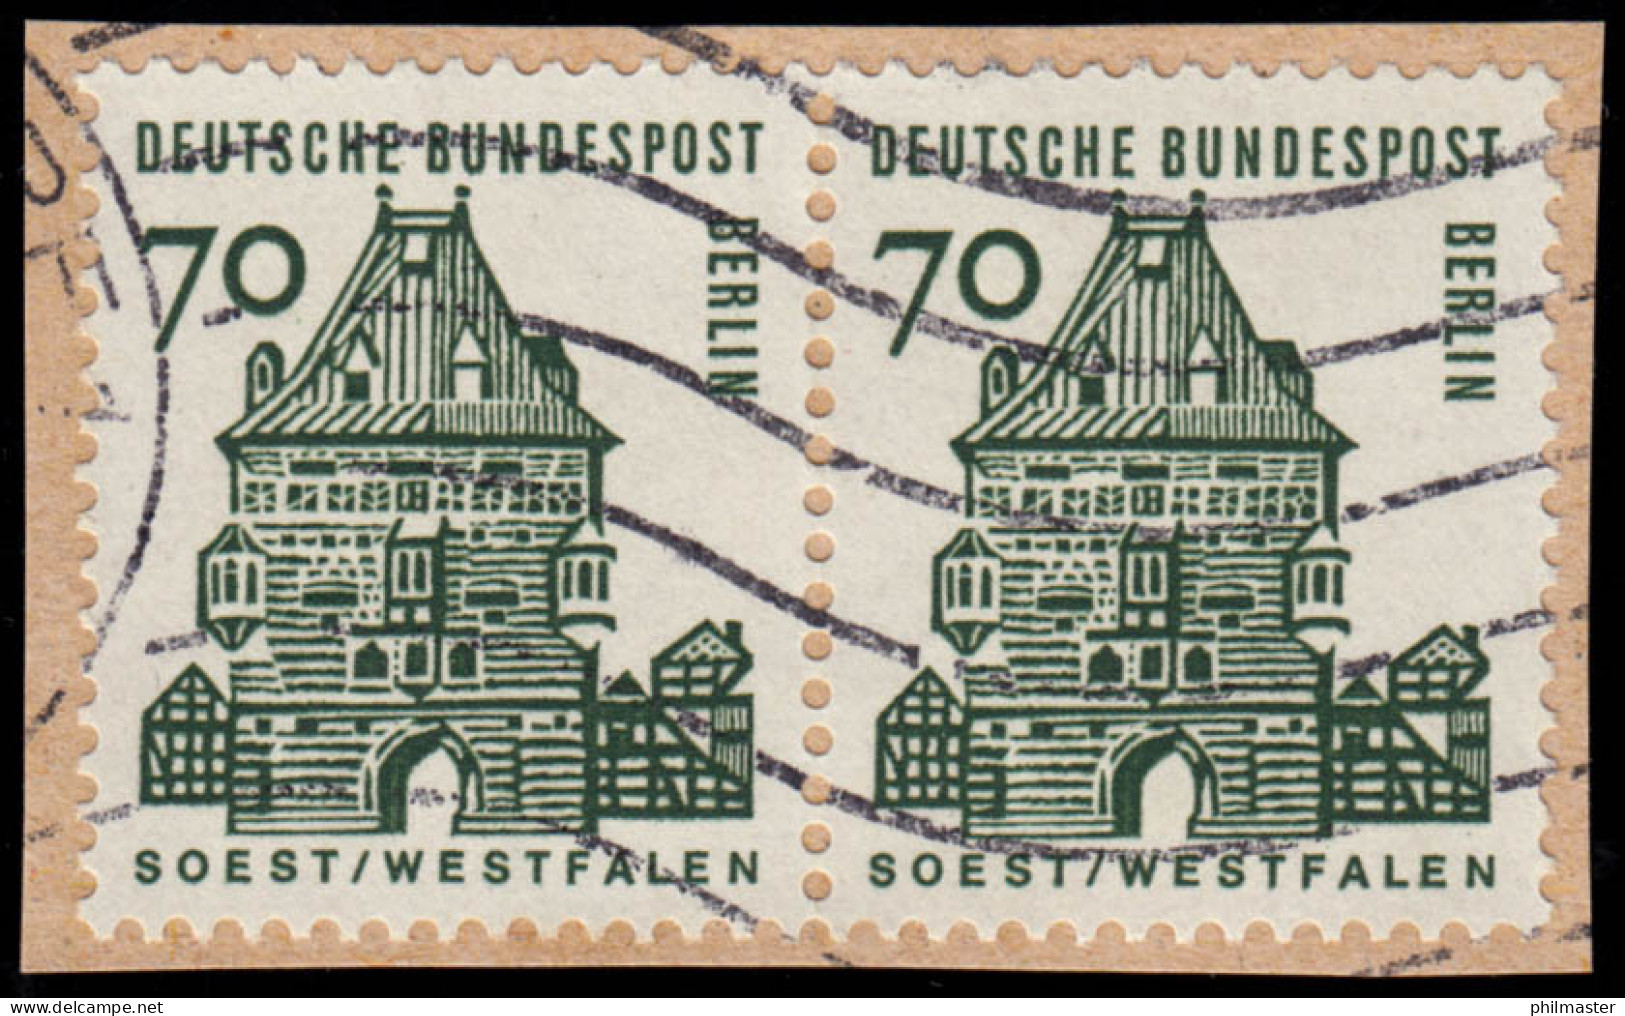 248 Im Waagerechten Paar Auf Bedarfs-Briefstück, Wellenstempel - Used Stamps